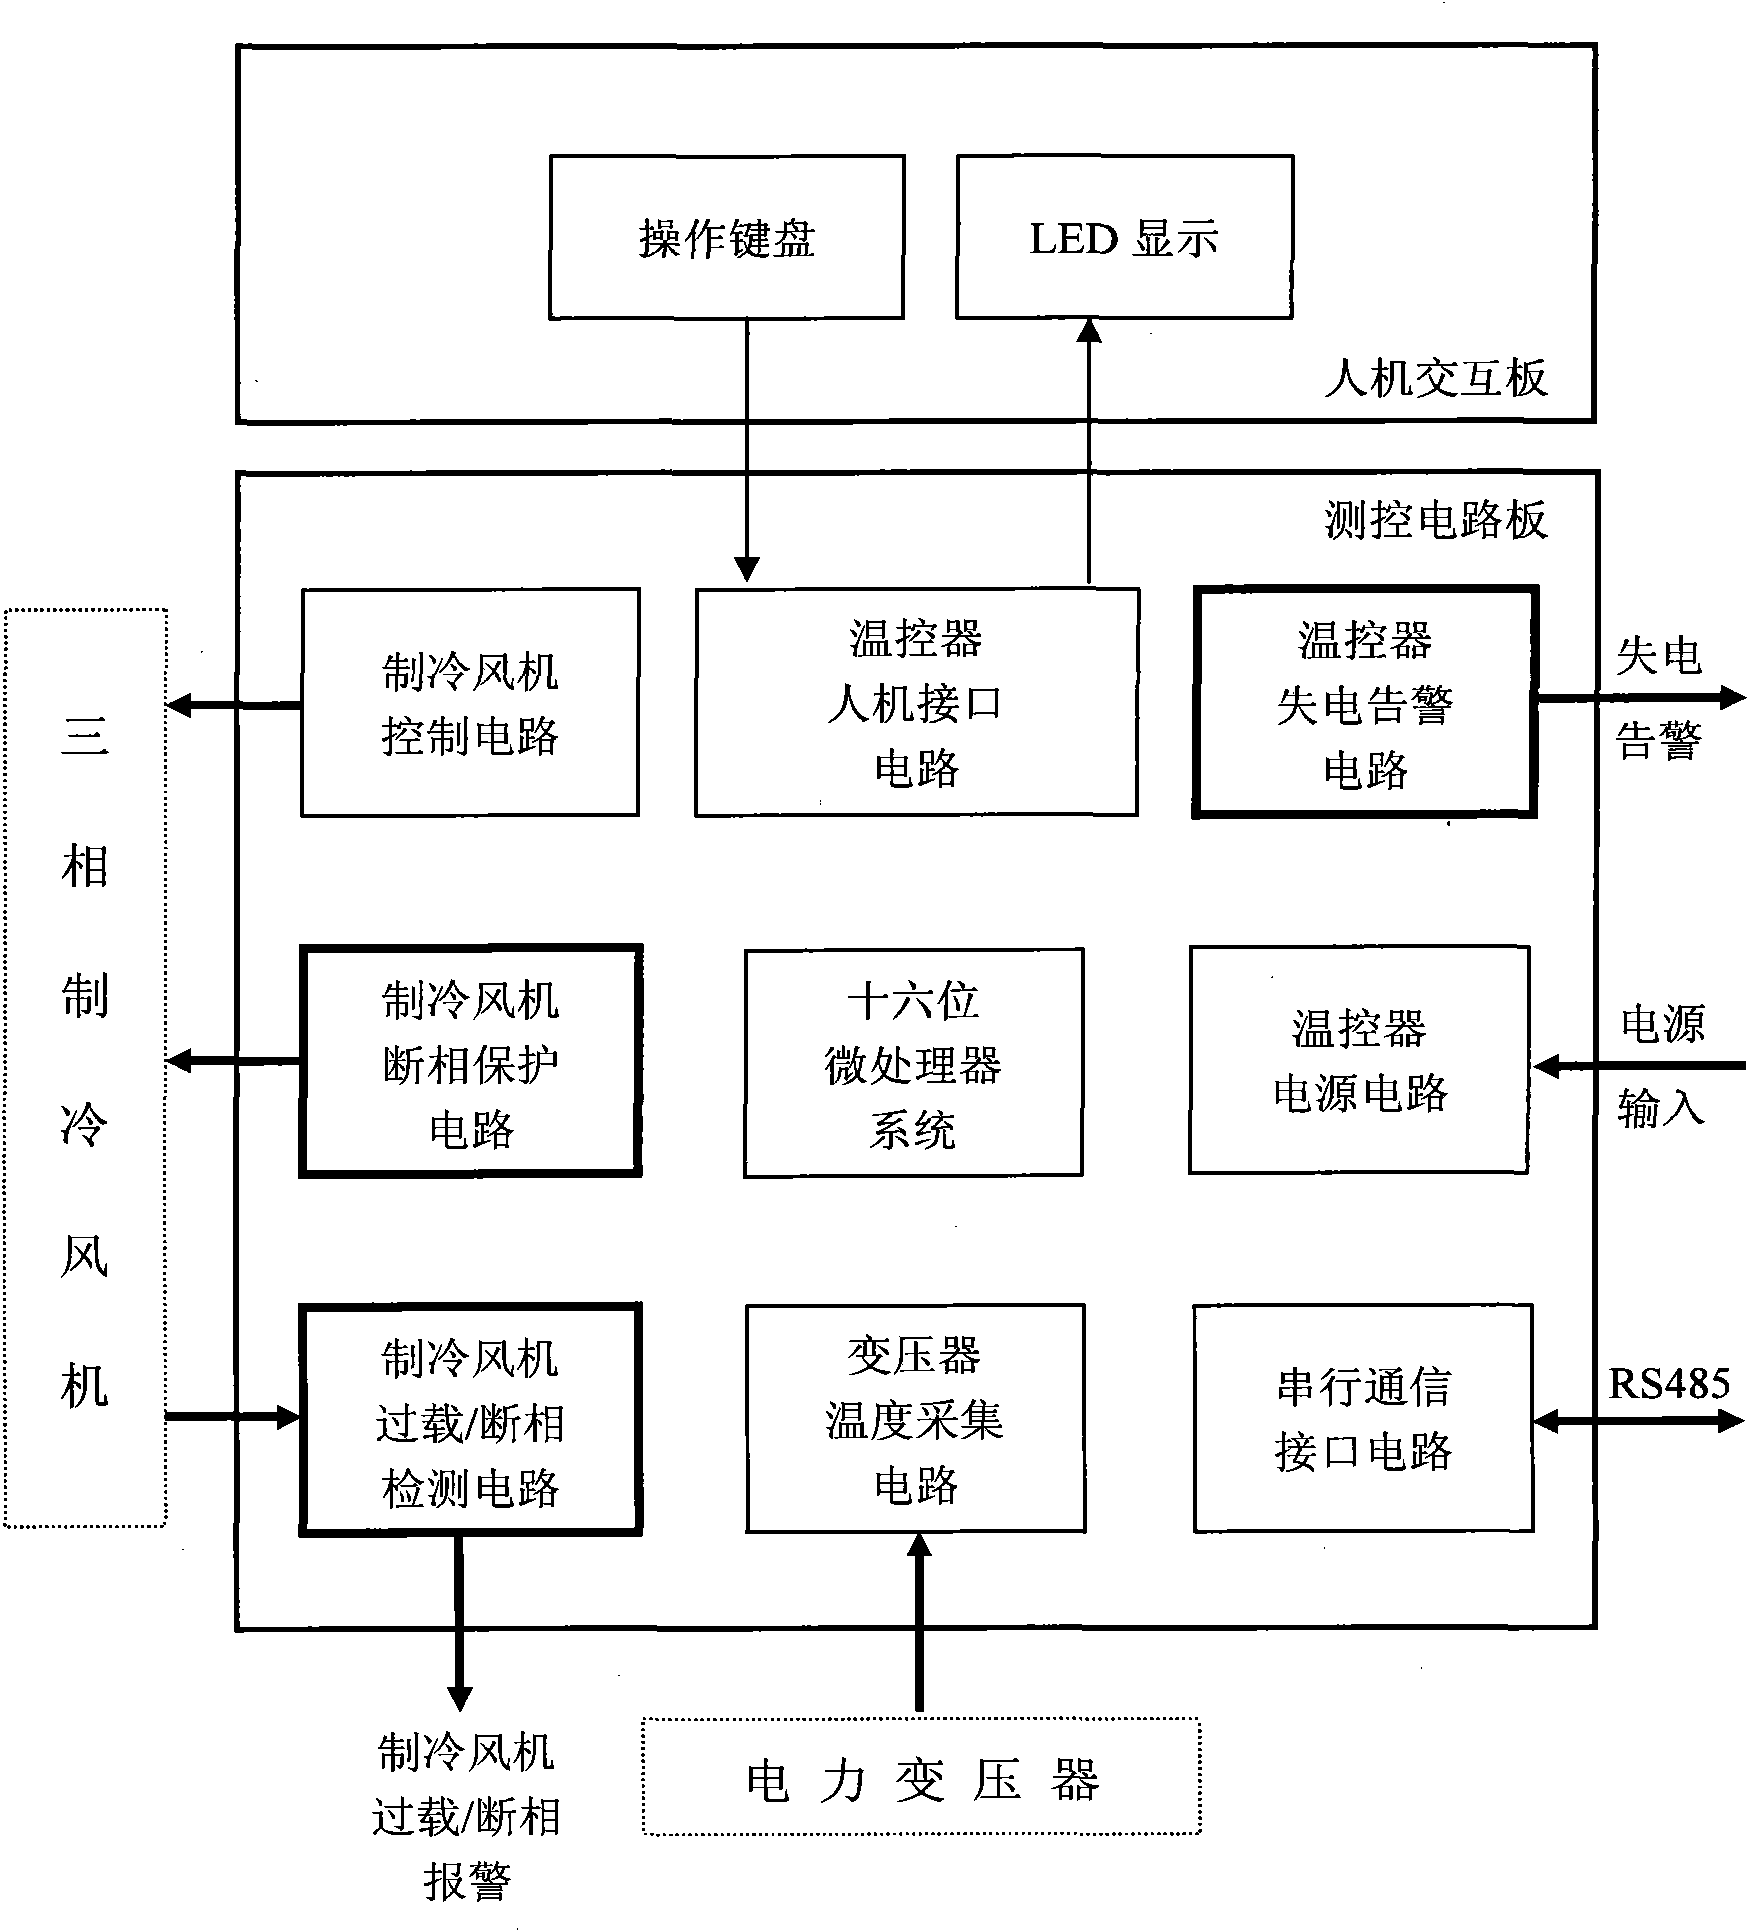 Electronic temperature controller of transformer